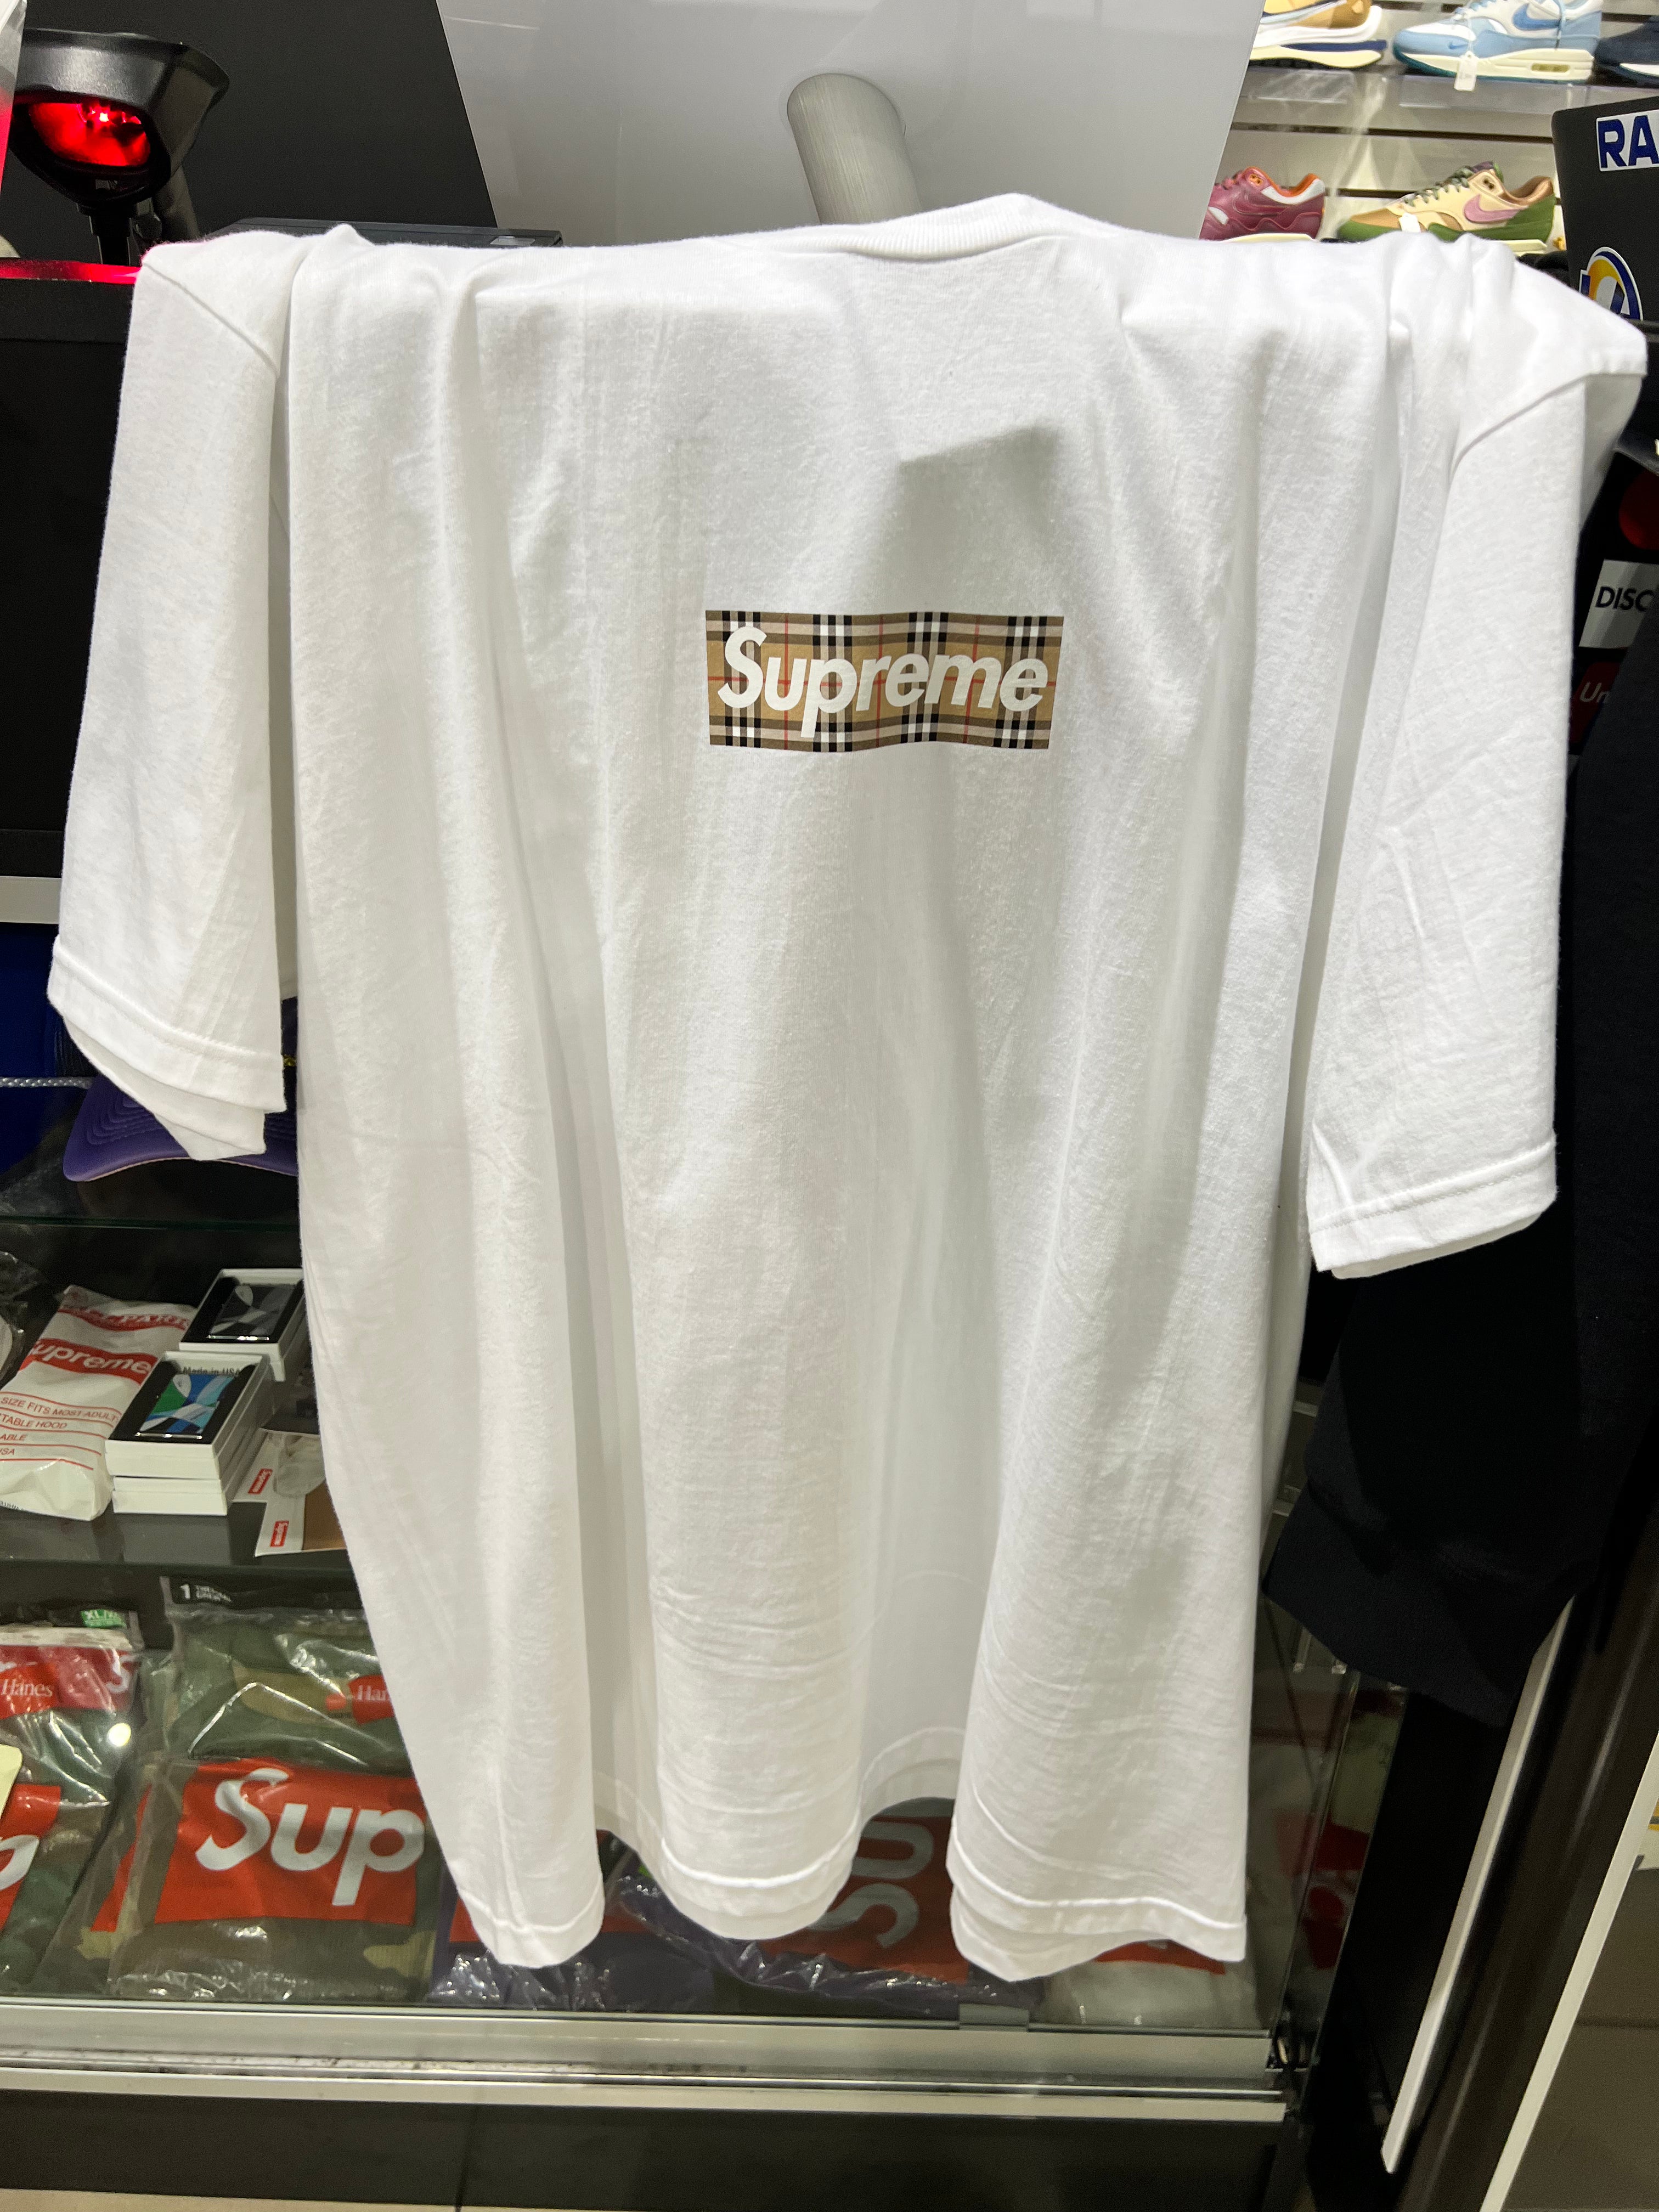 WTS] Burberry Box Logo Tee, White, Large, $210 Shipped : r/Supreme